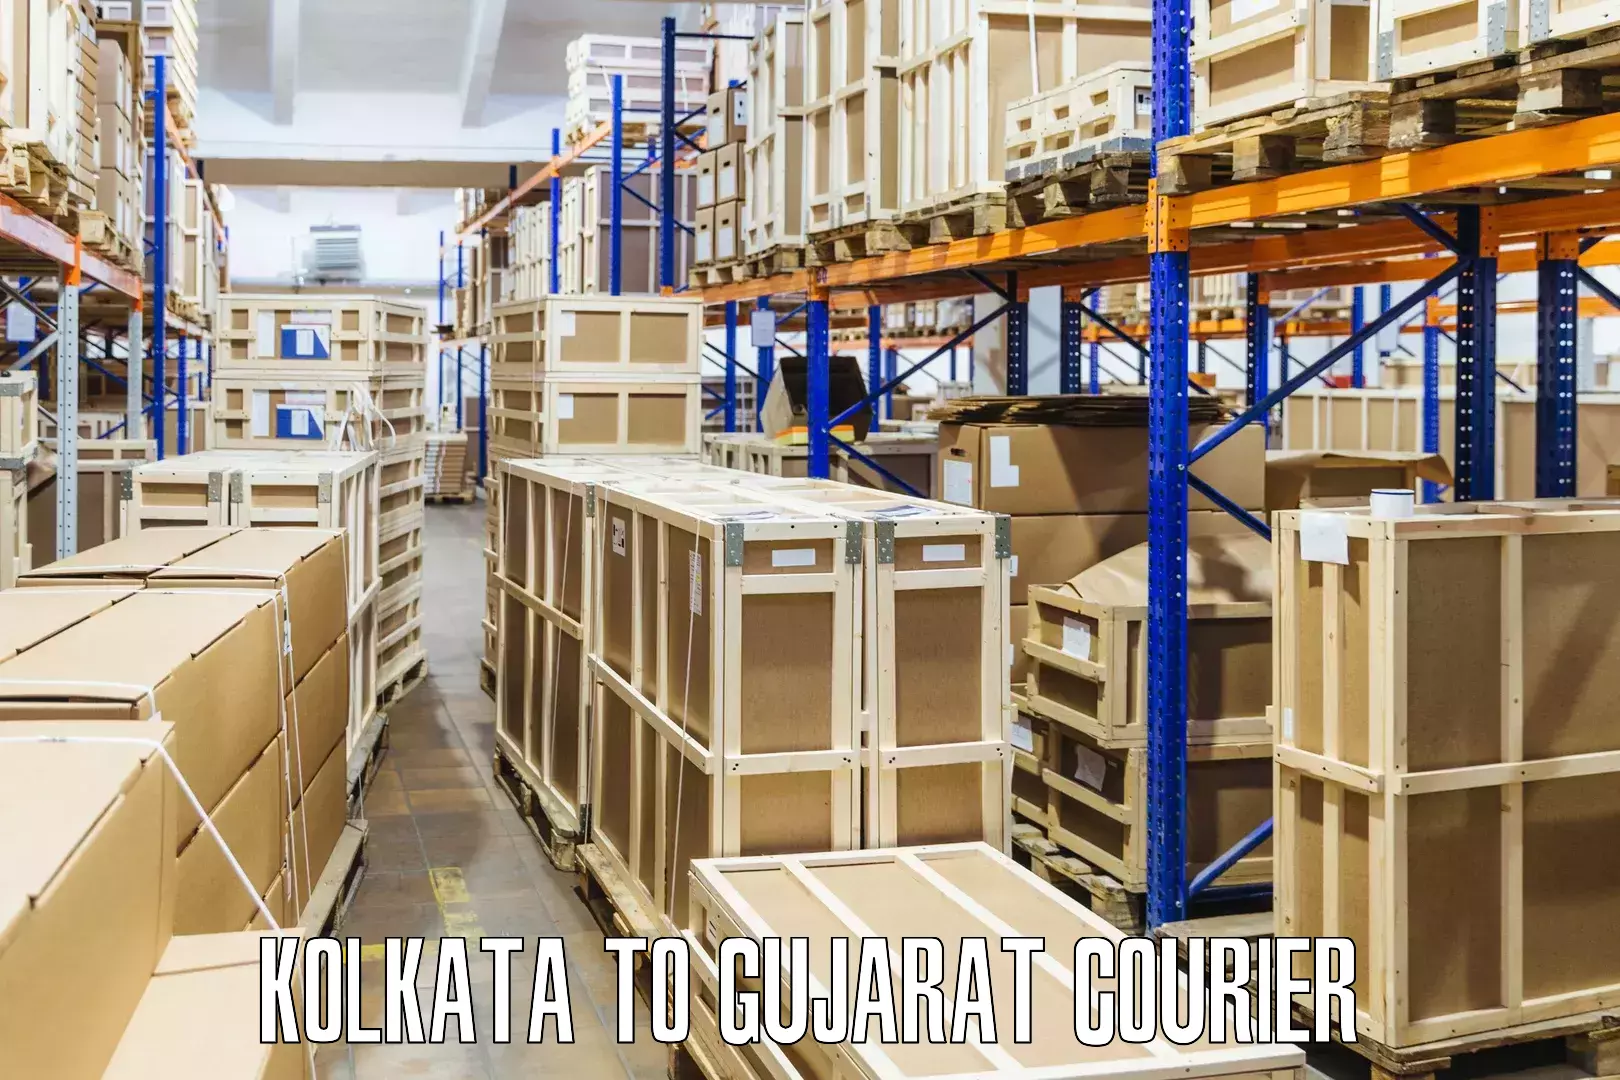 Advanced delivery network Kolkata to Gujarat